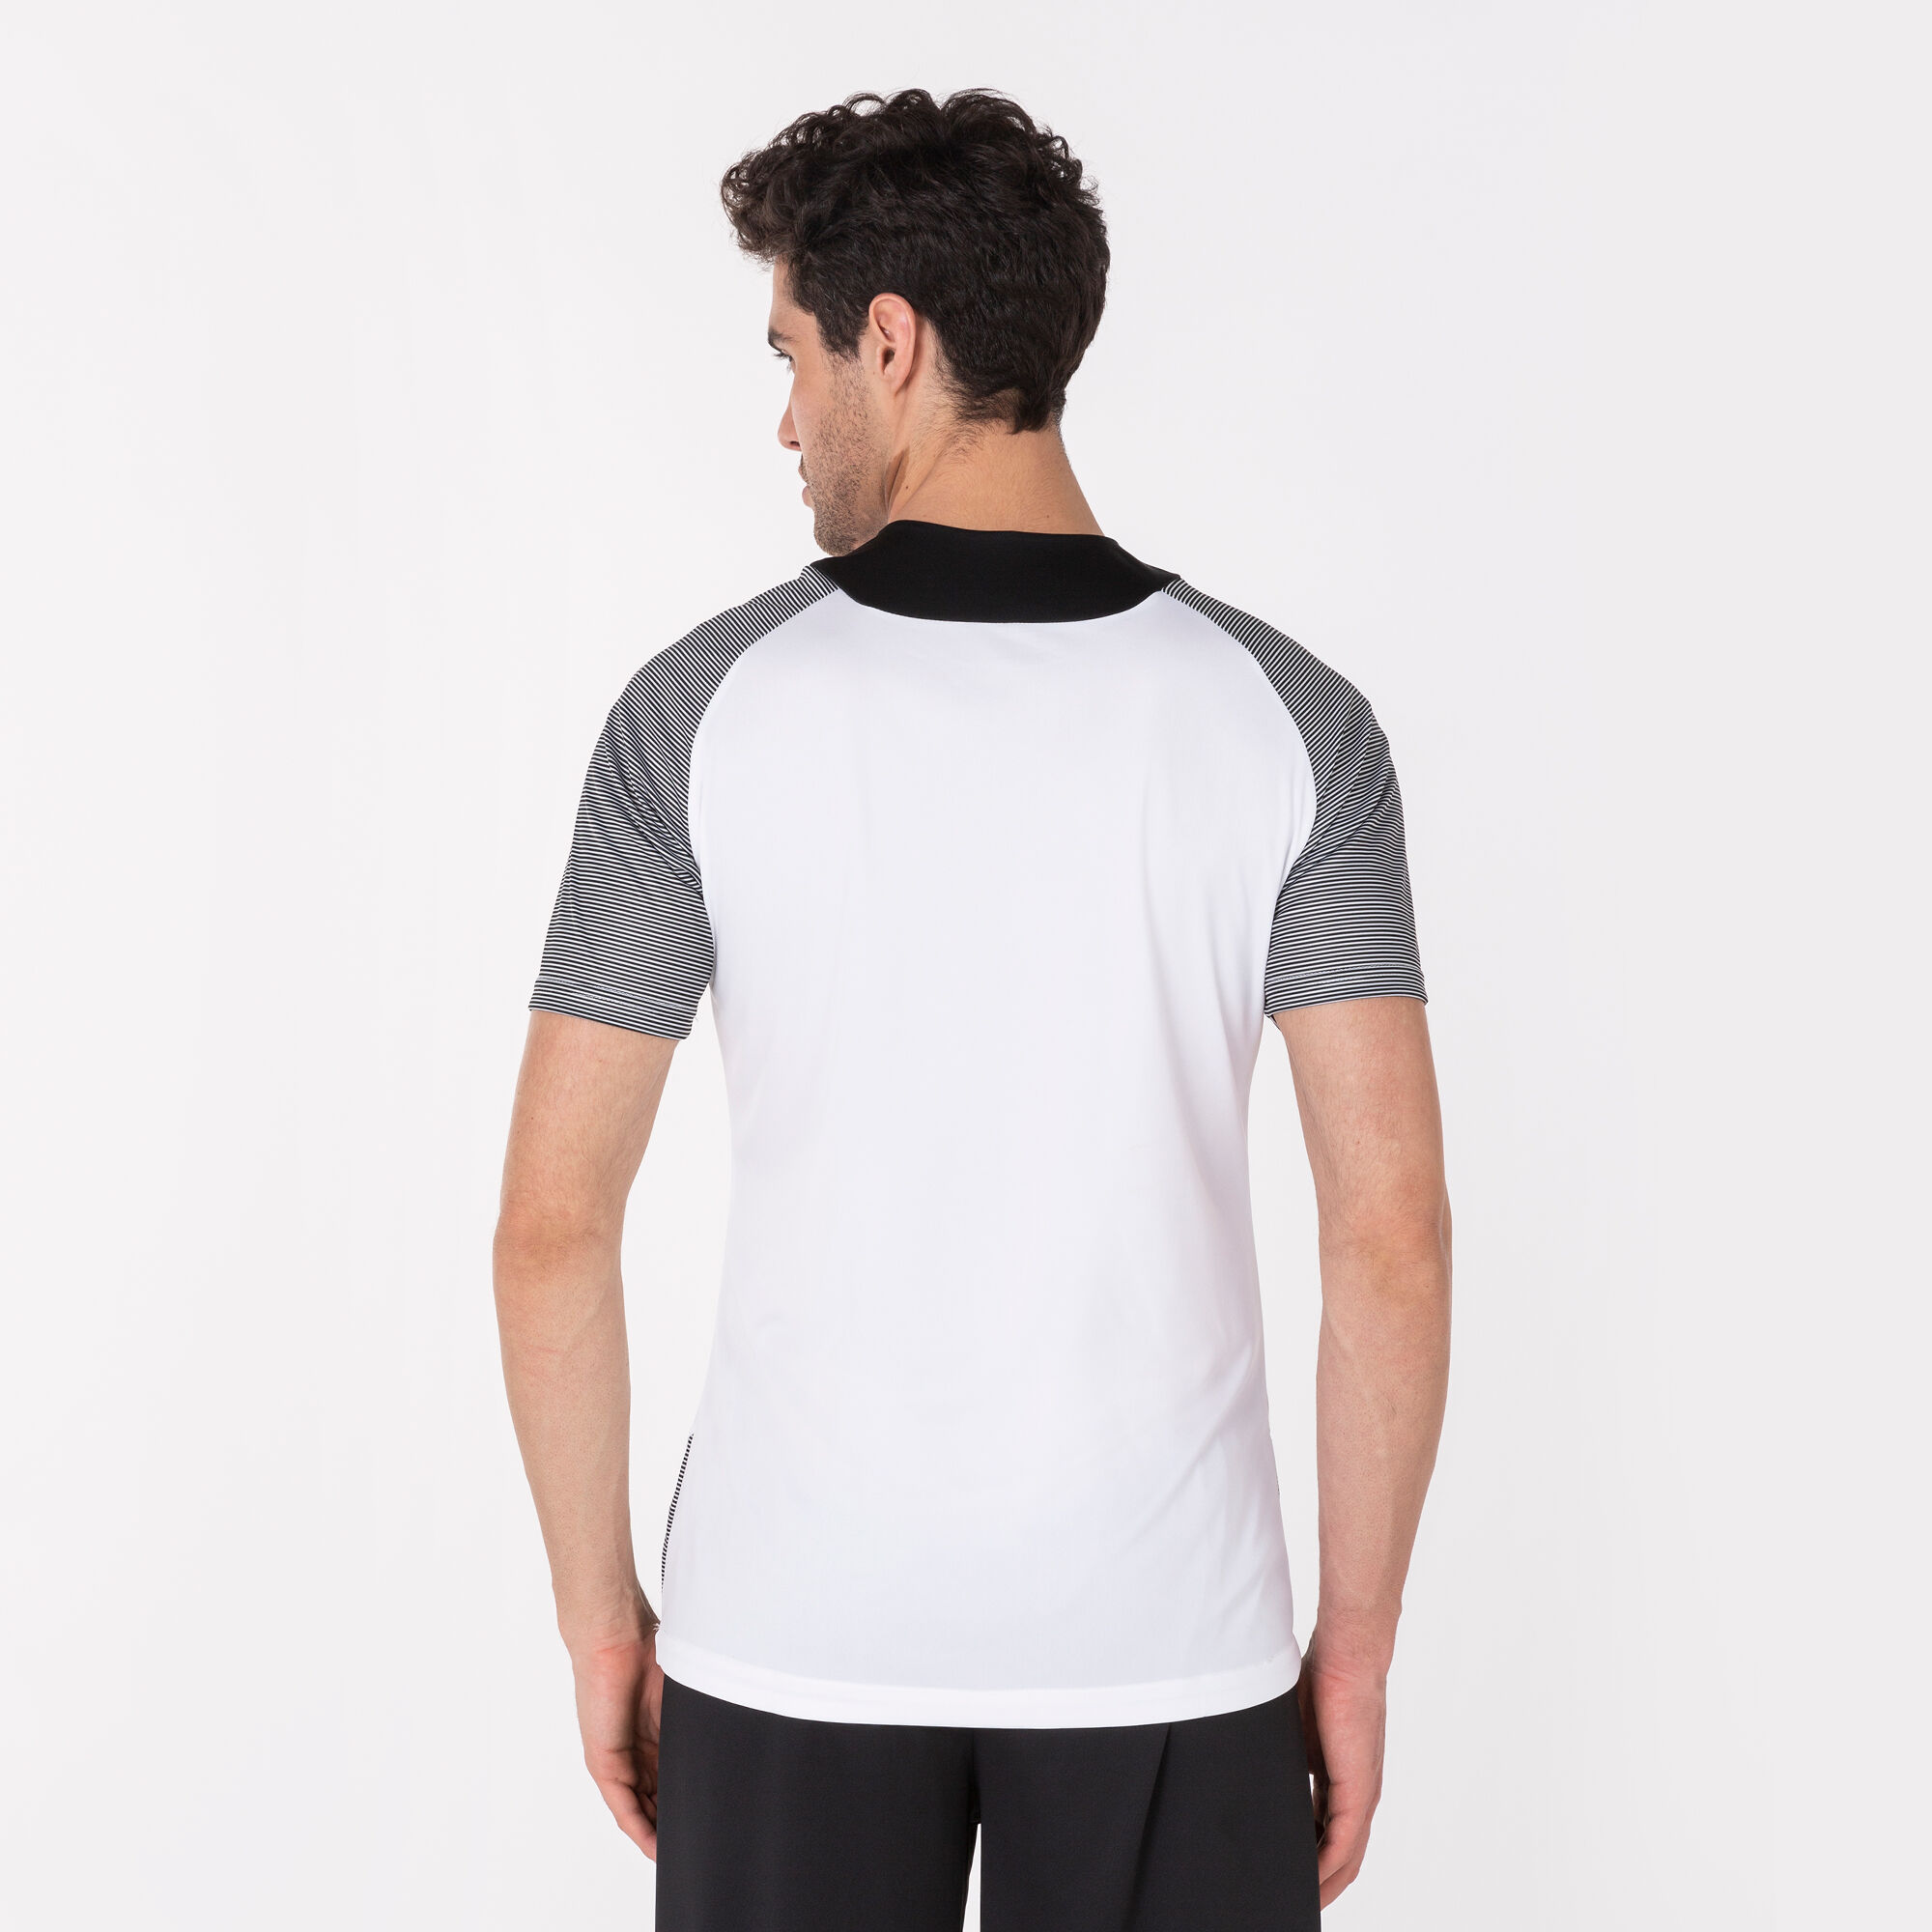 Camiseta manga corta hombre Essential II blanco negro